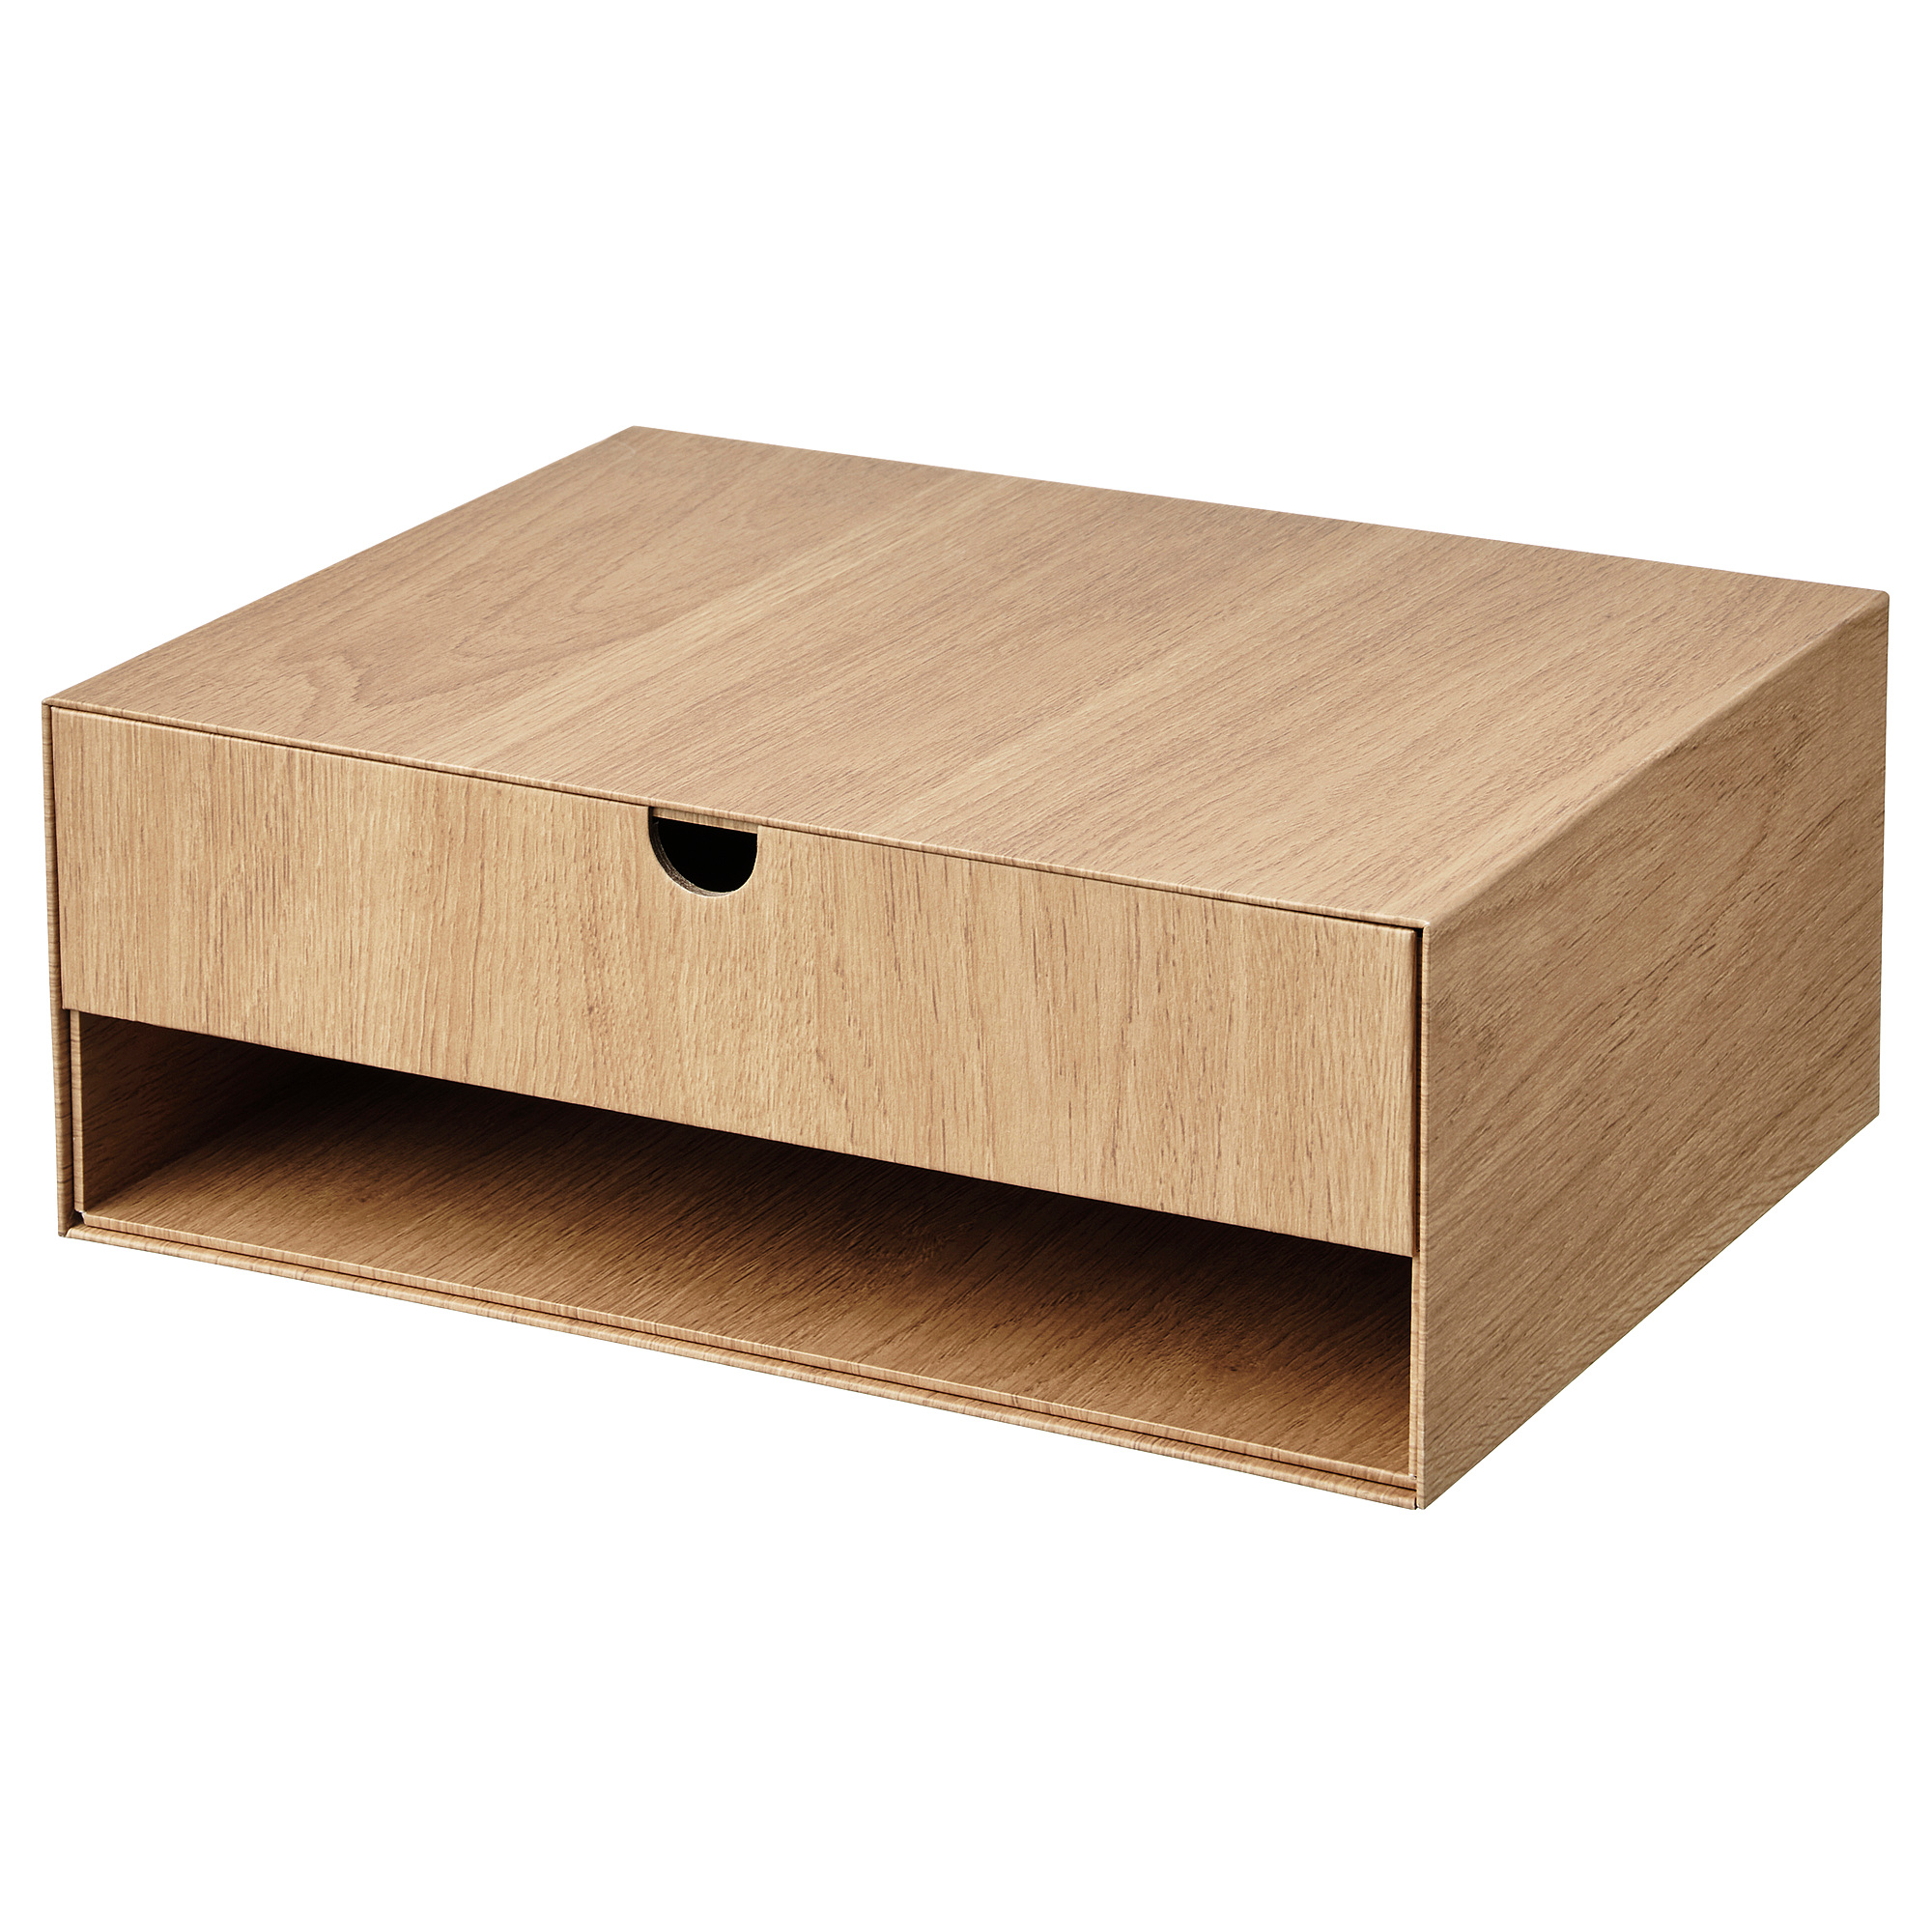 HÄSTVISKARE mini chest of drawers